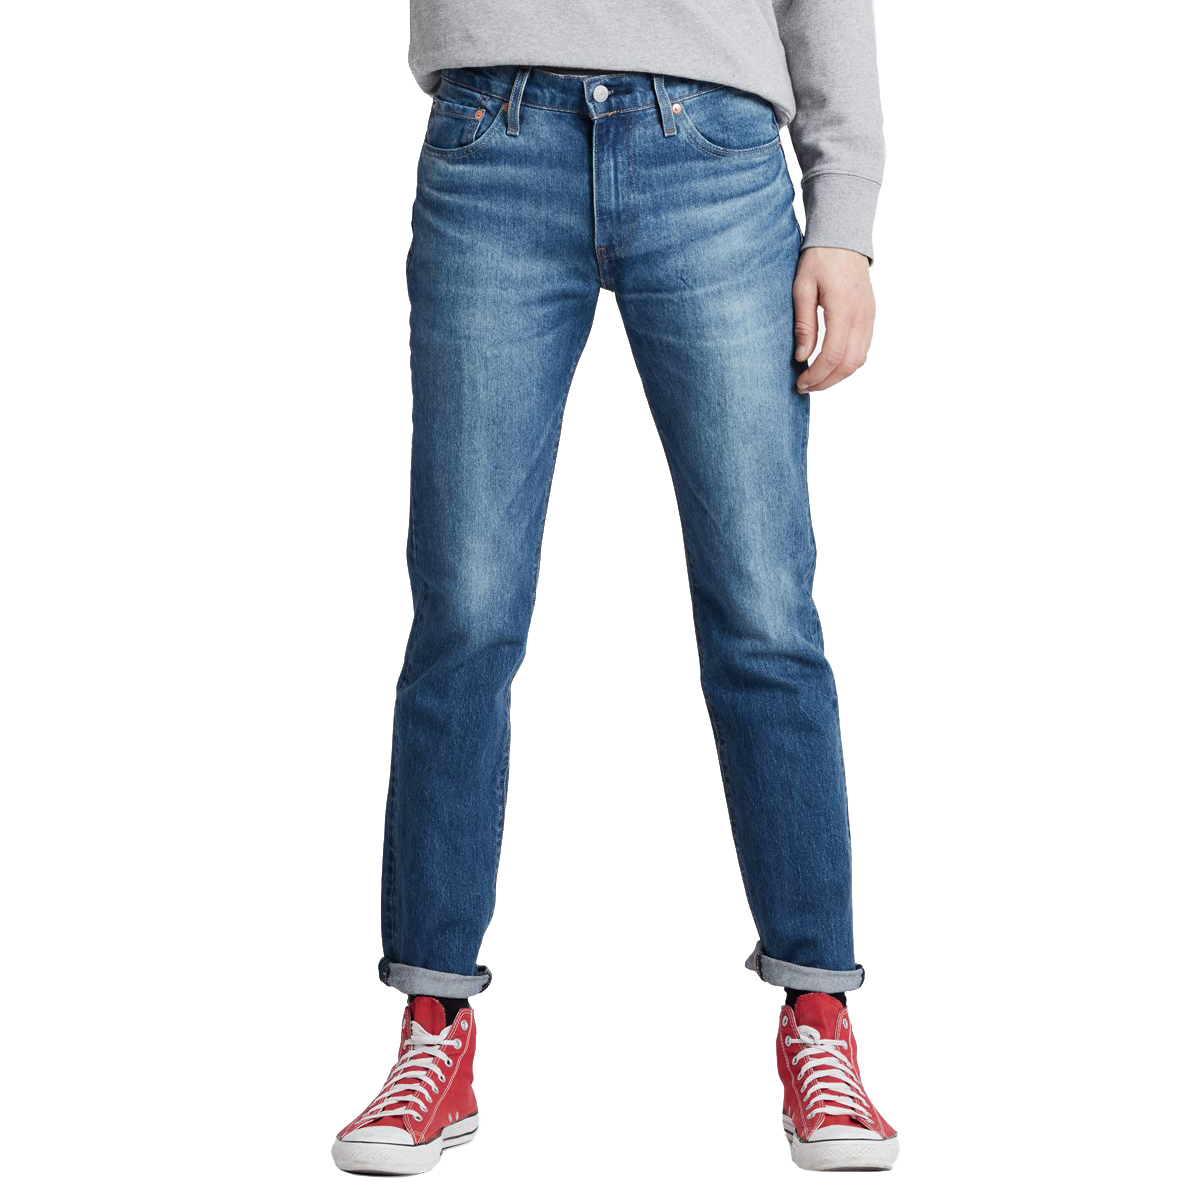 jaqueta jeans forum masculina